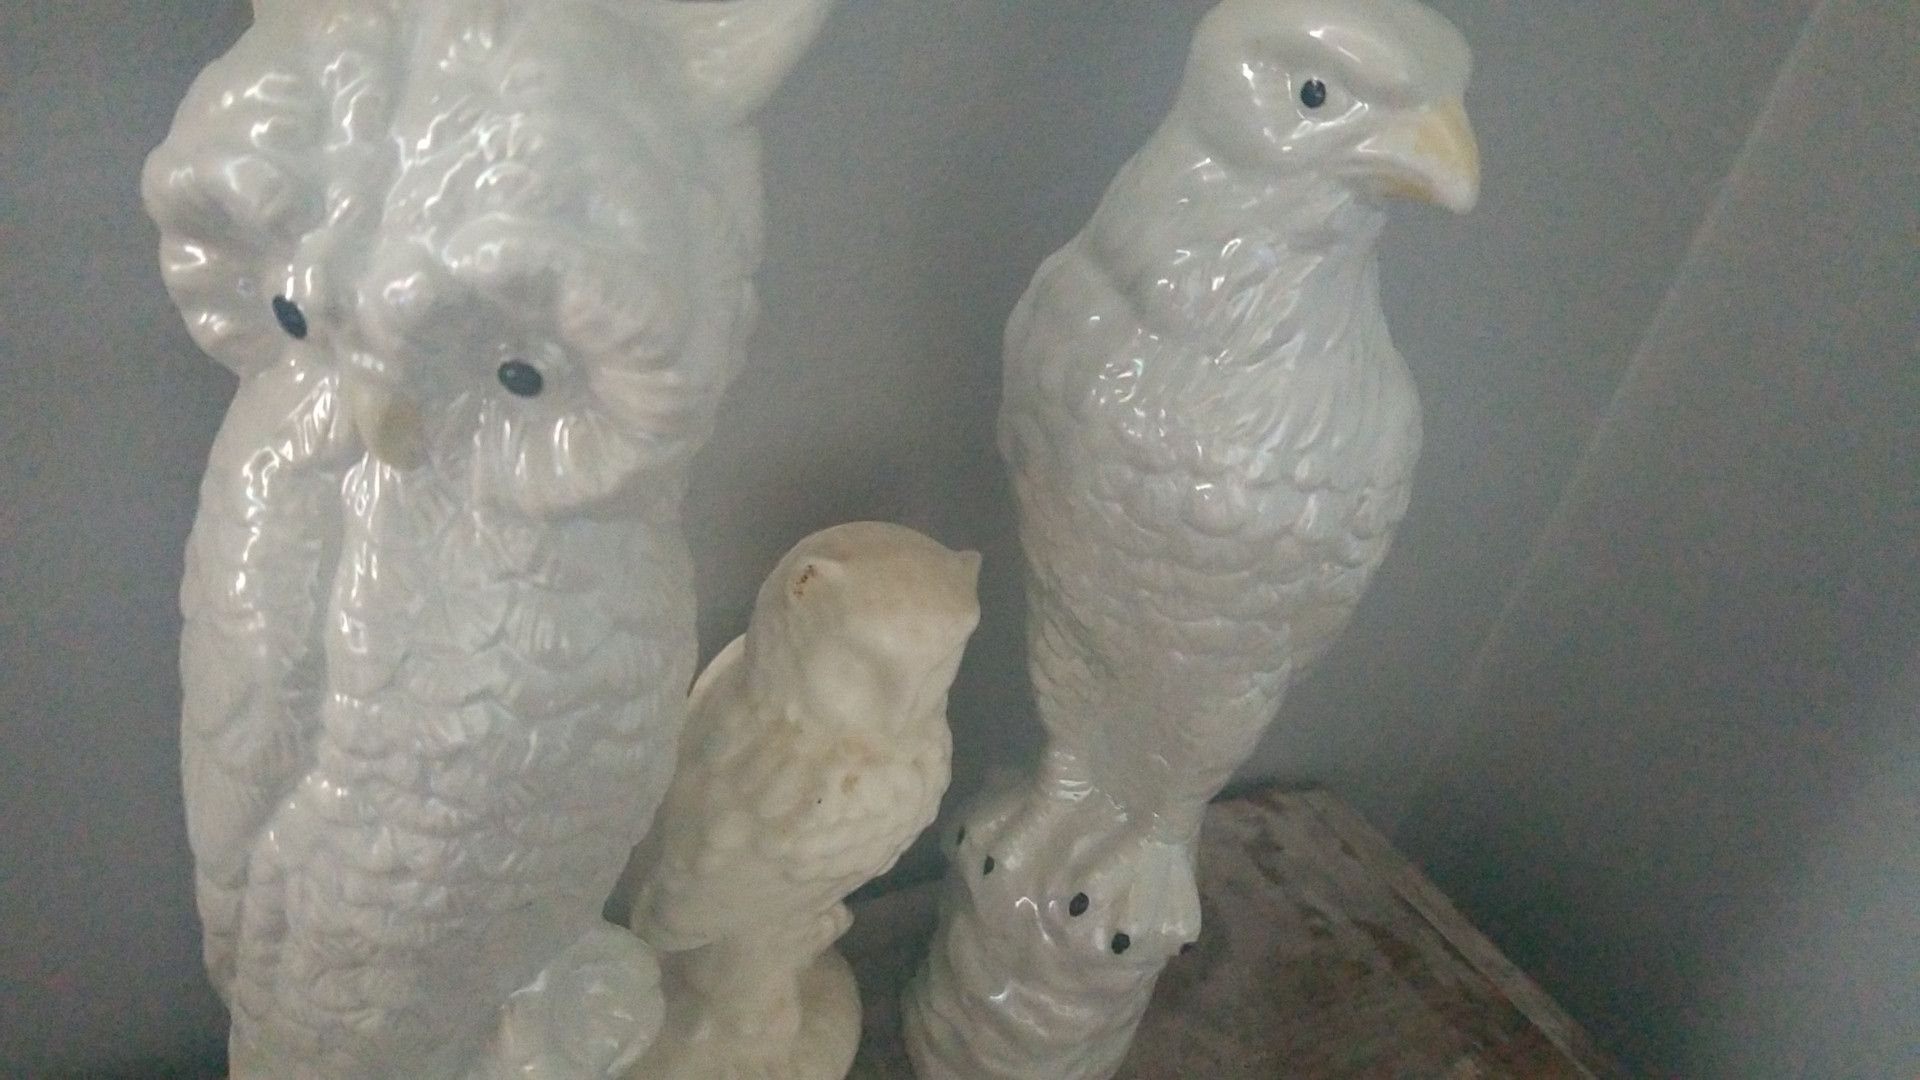 Bird statue figurines